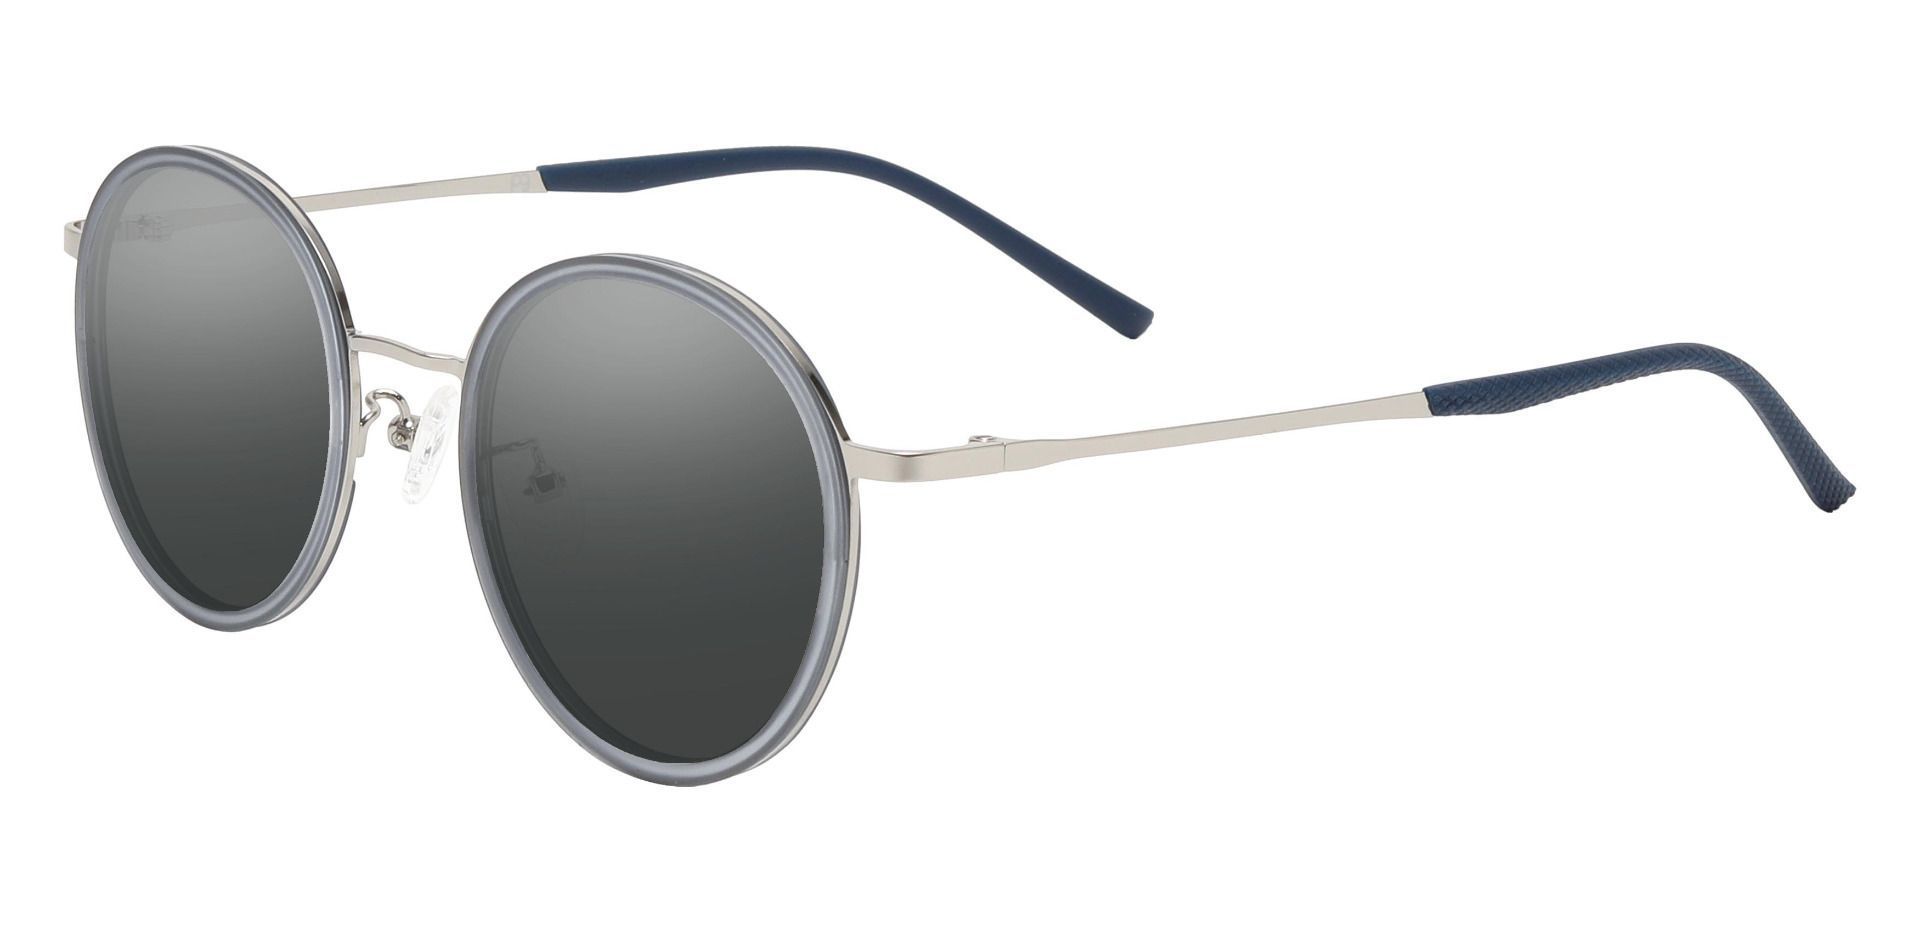 Brunswick Round Prescription Sunglasses - Gray Frame With Gray Lenses